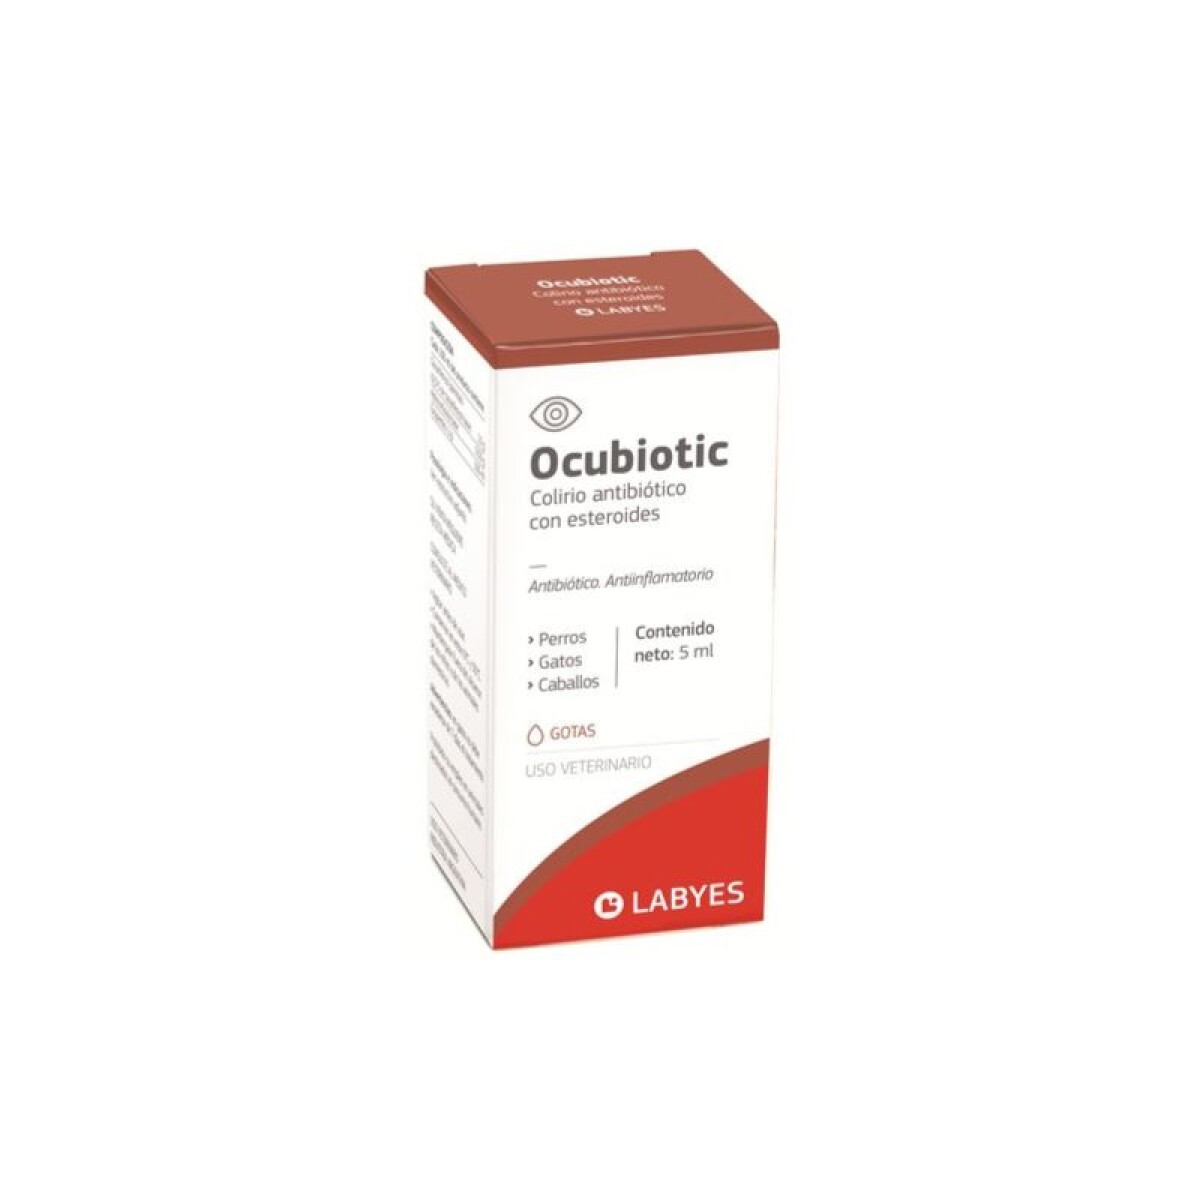 OCUBIOTIC CON ESTEROIDES 5ML - Ocubiotic Con Esteroides 5ml 